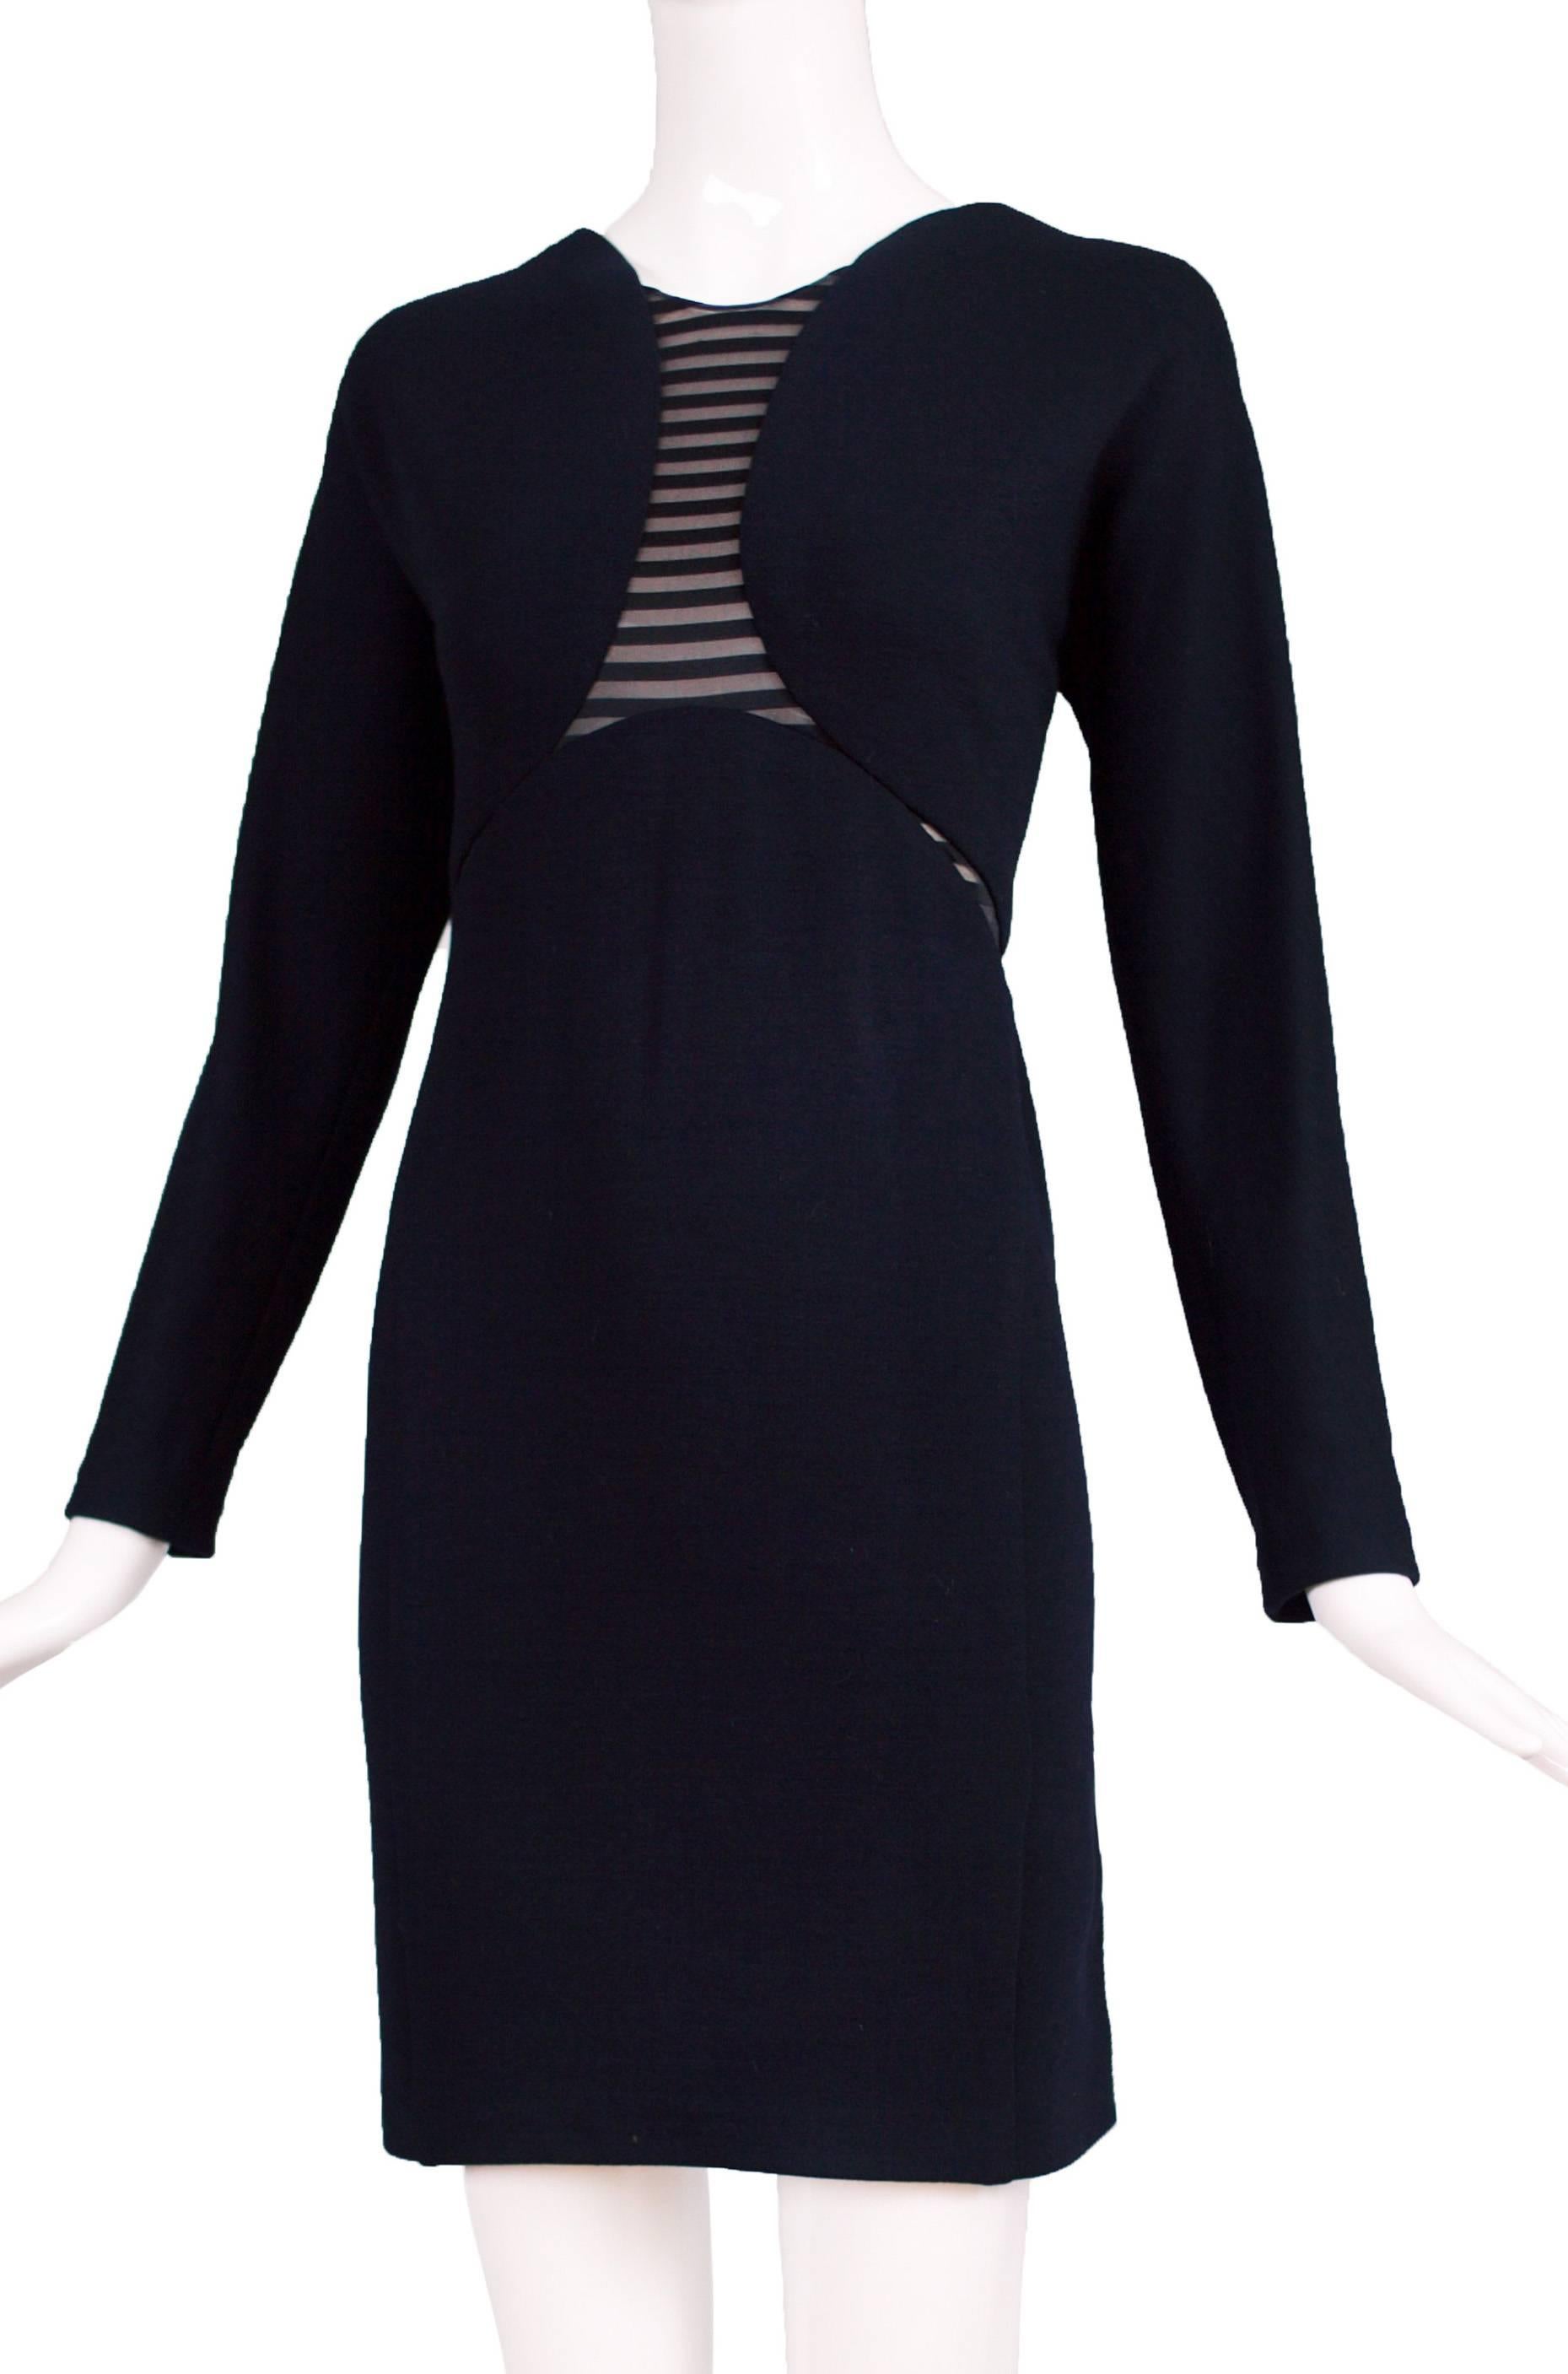 1990s Geoffrey Beene stretch wool jersey dress with silk or nylon 